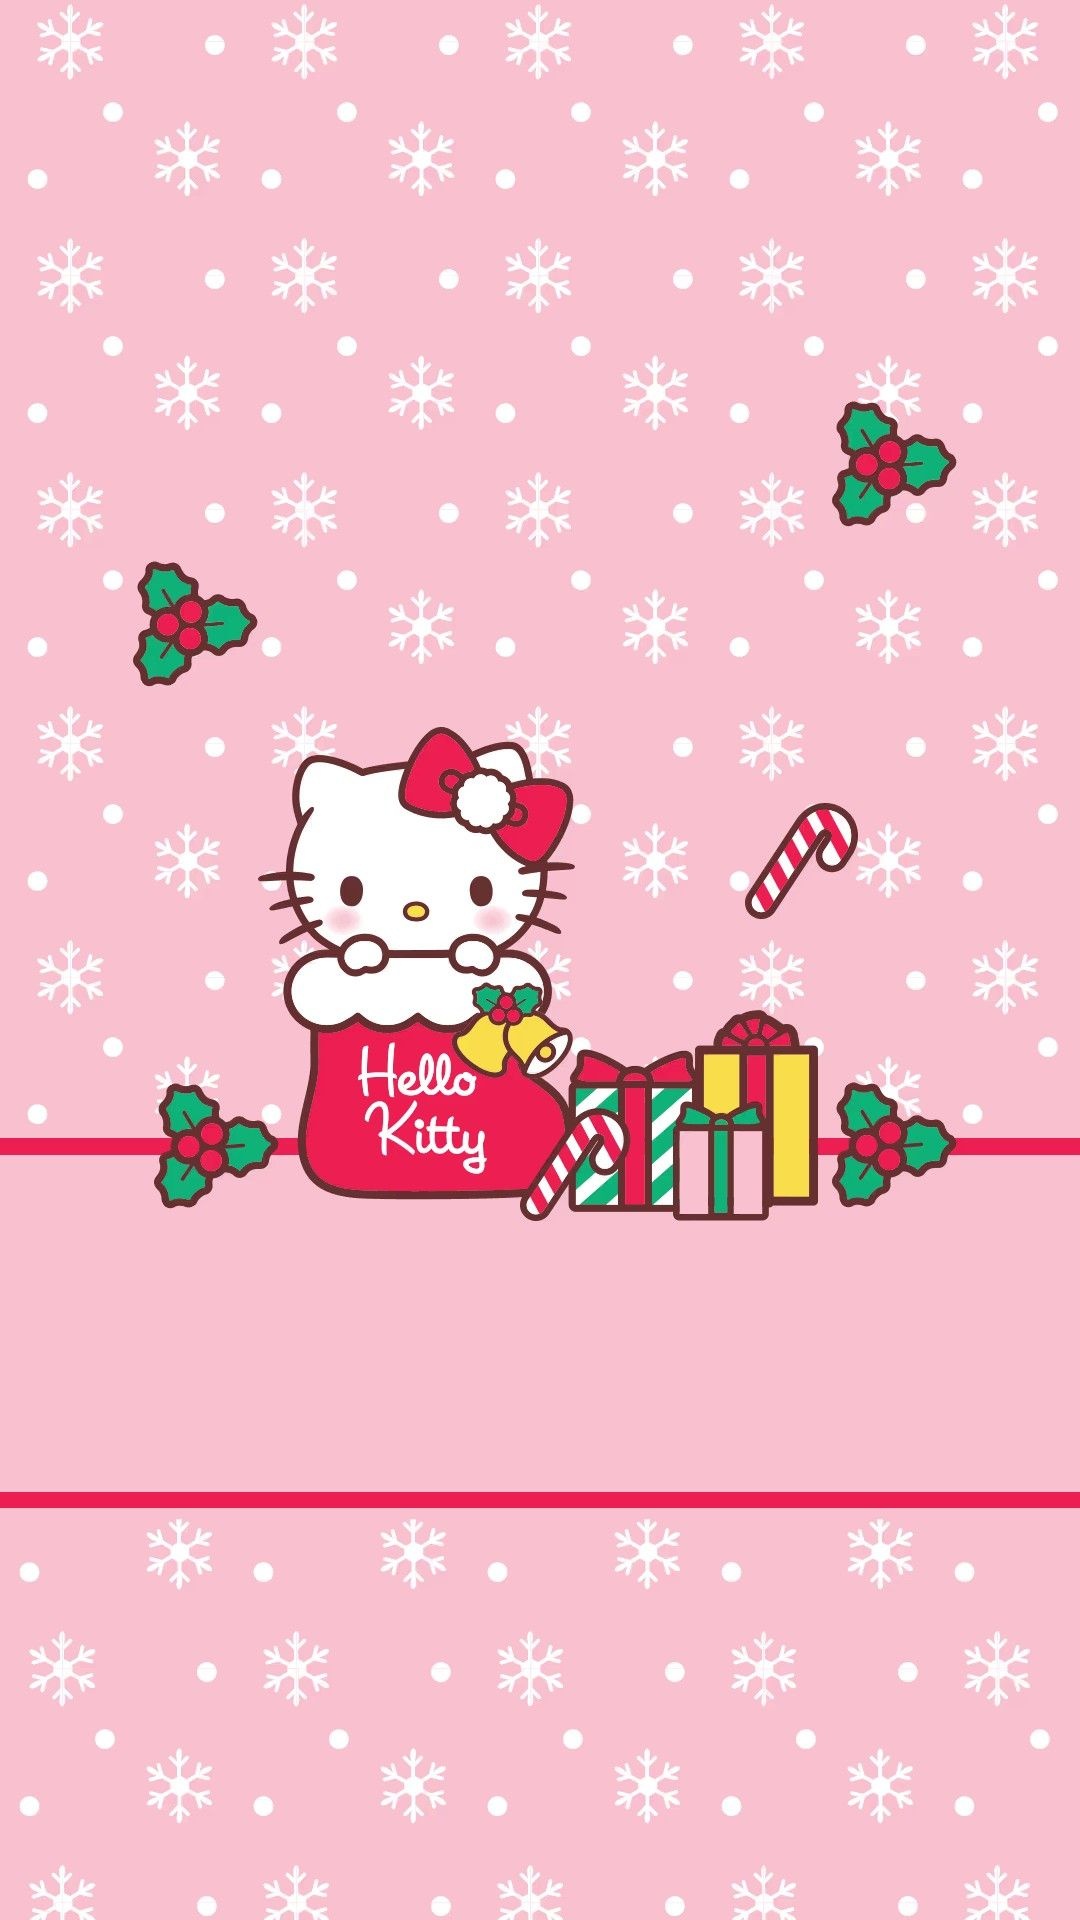 Hello Kitty Christmas, Festive wallpapers, Adorable kitty, Holiday cheer, 1080x1920 Full HD Handy